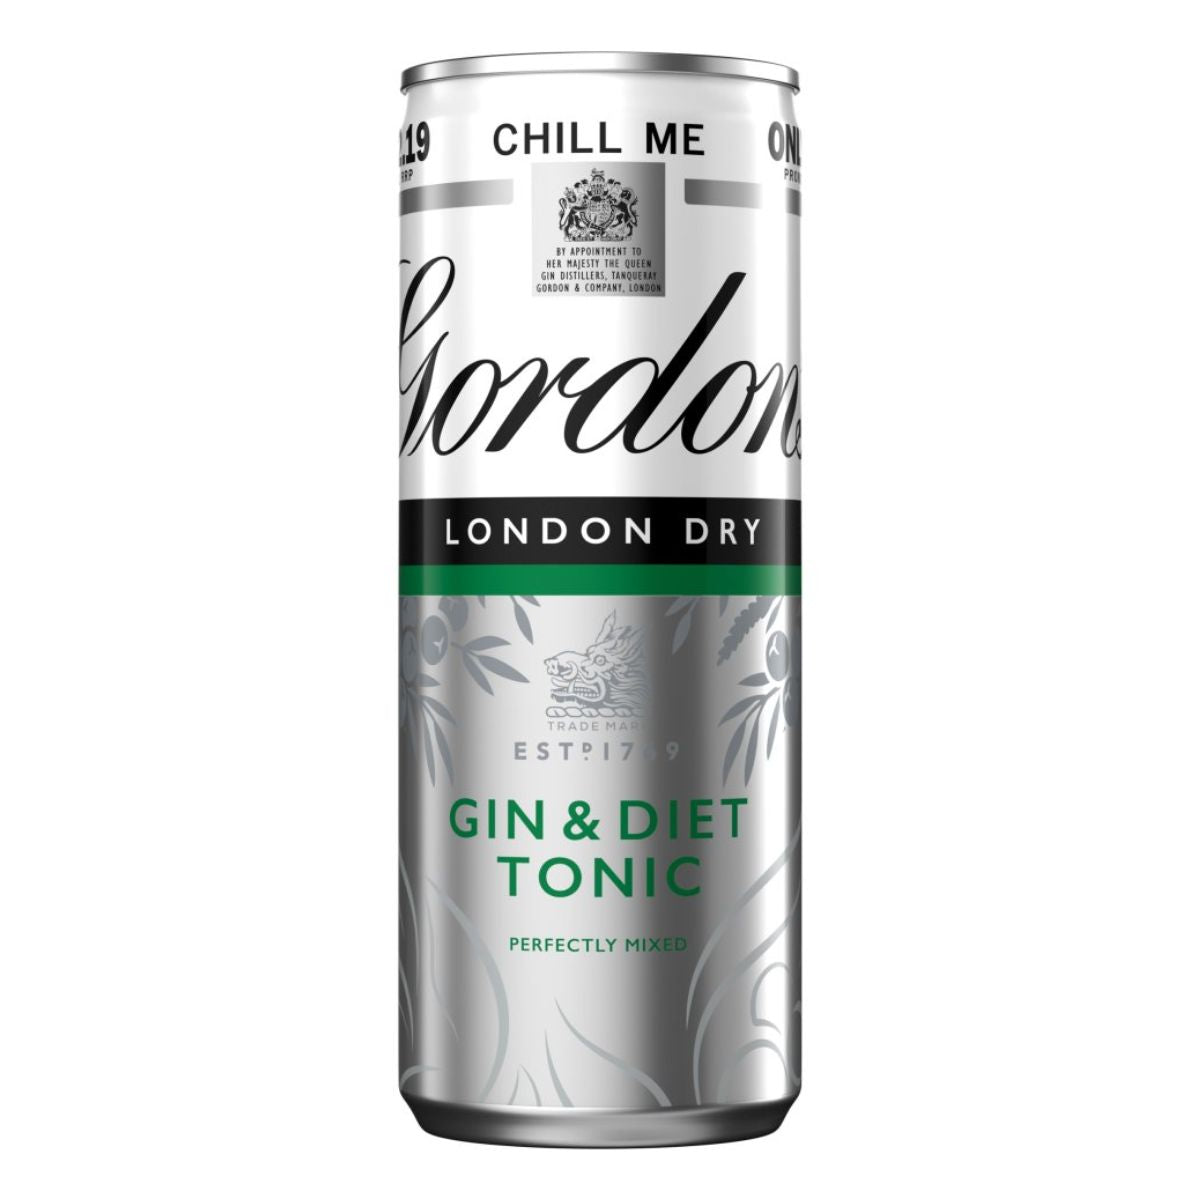 Chill me Gordons - Gin & Diet Tonic (5.0% ABV) - 250ml.